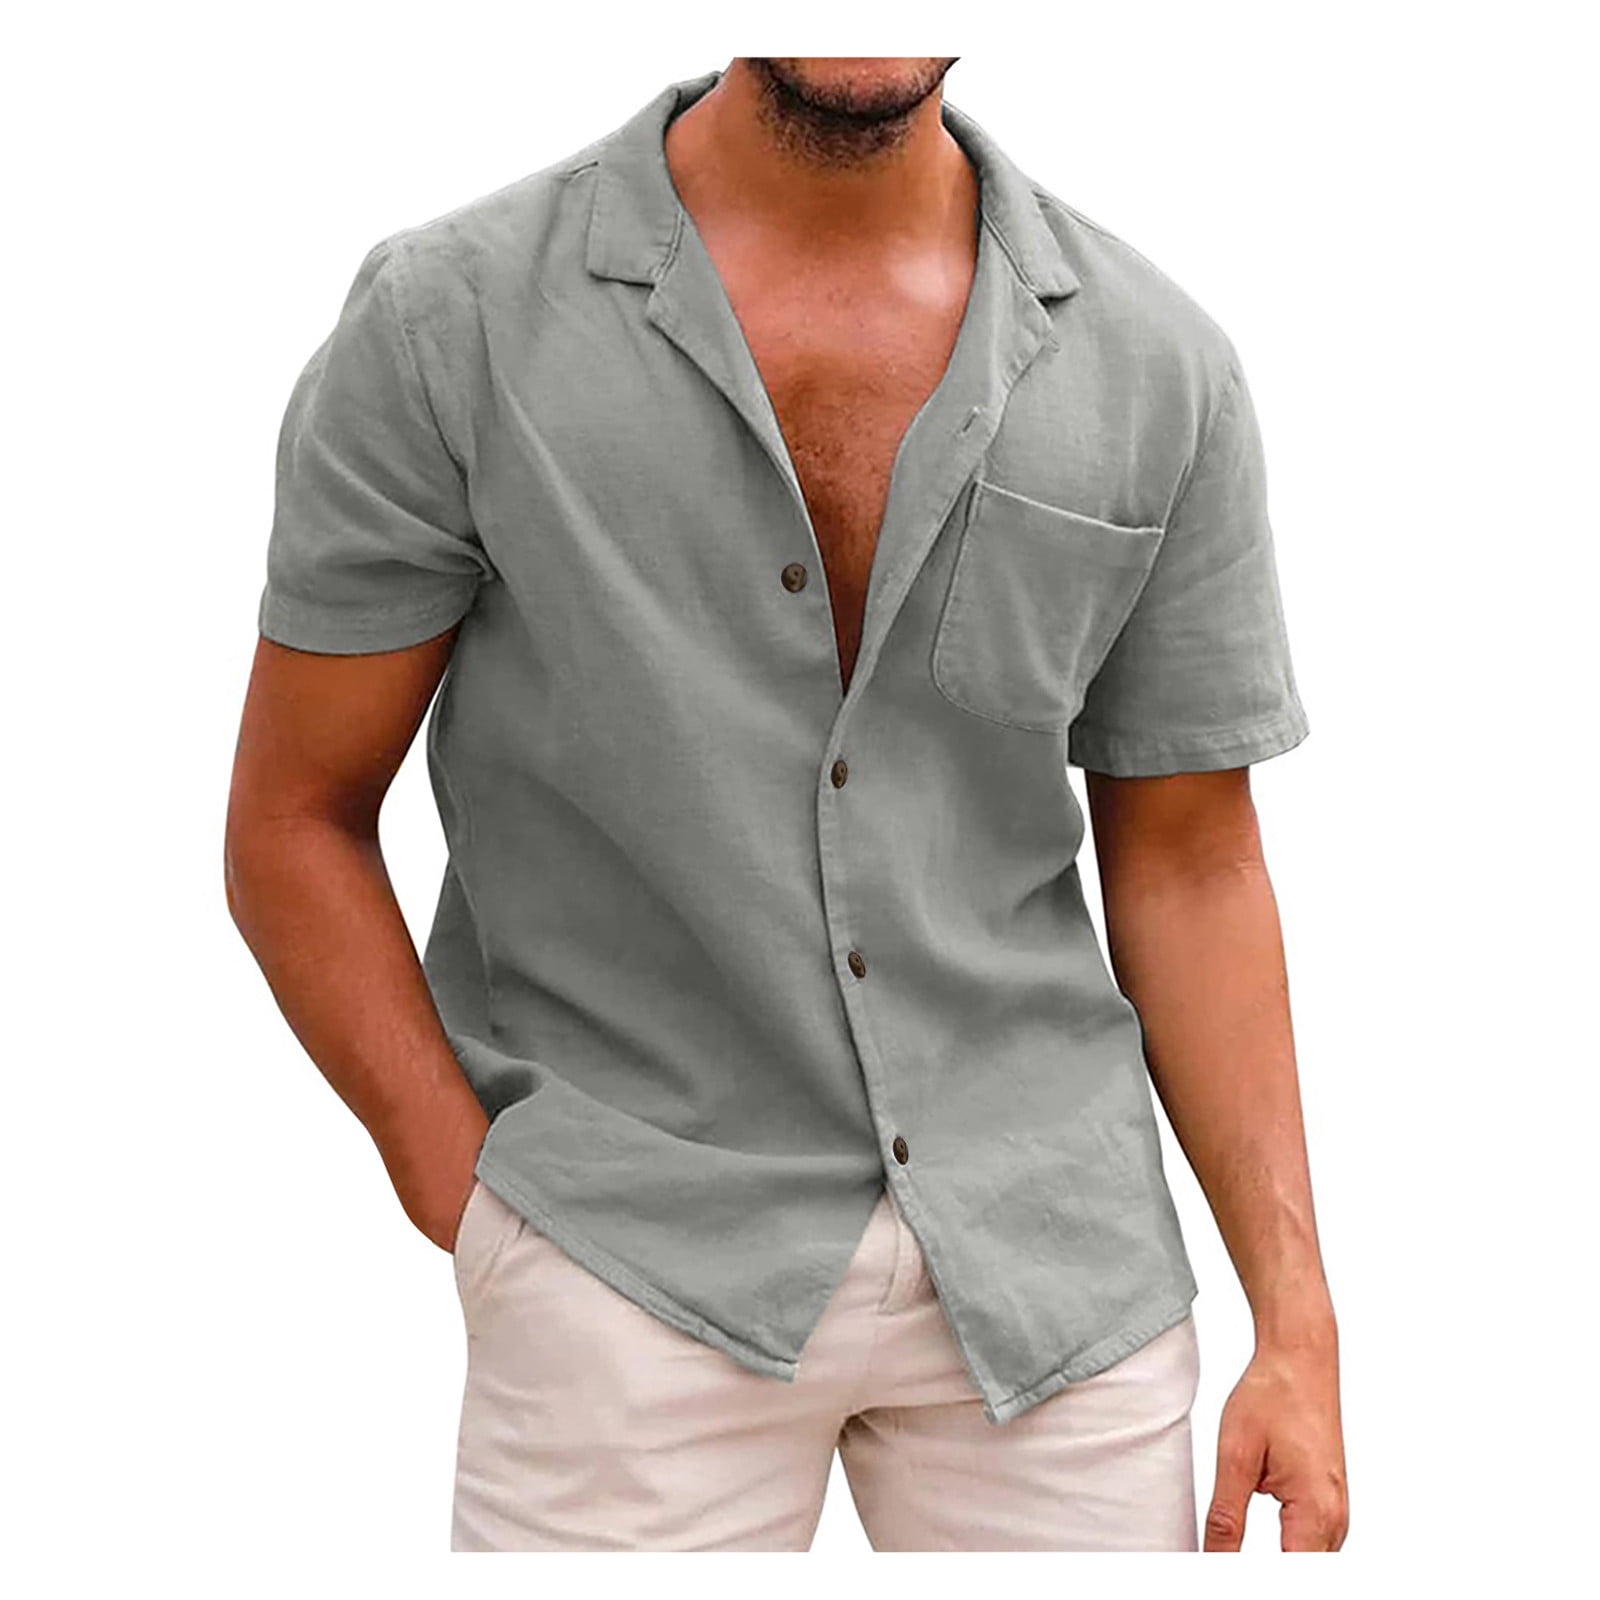 RYRJJ On Clearance Men's Short Sleeve Regular Fit Dress Shirts Button Down  Shirts Summer Casual Beach Shirt with Chest Pocket Gray L 